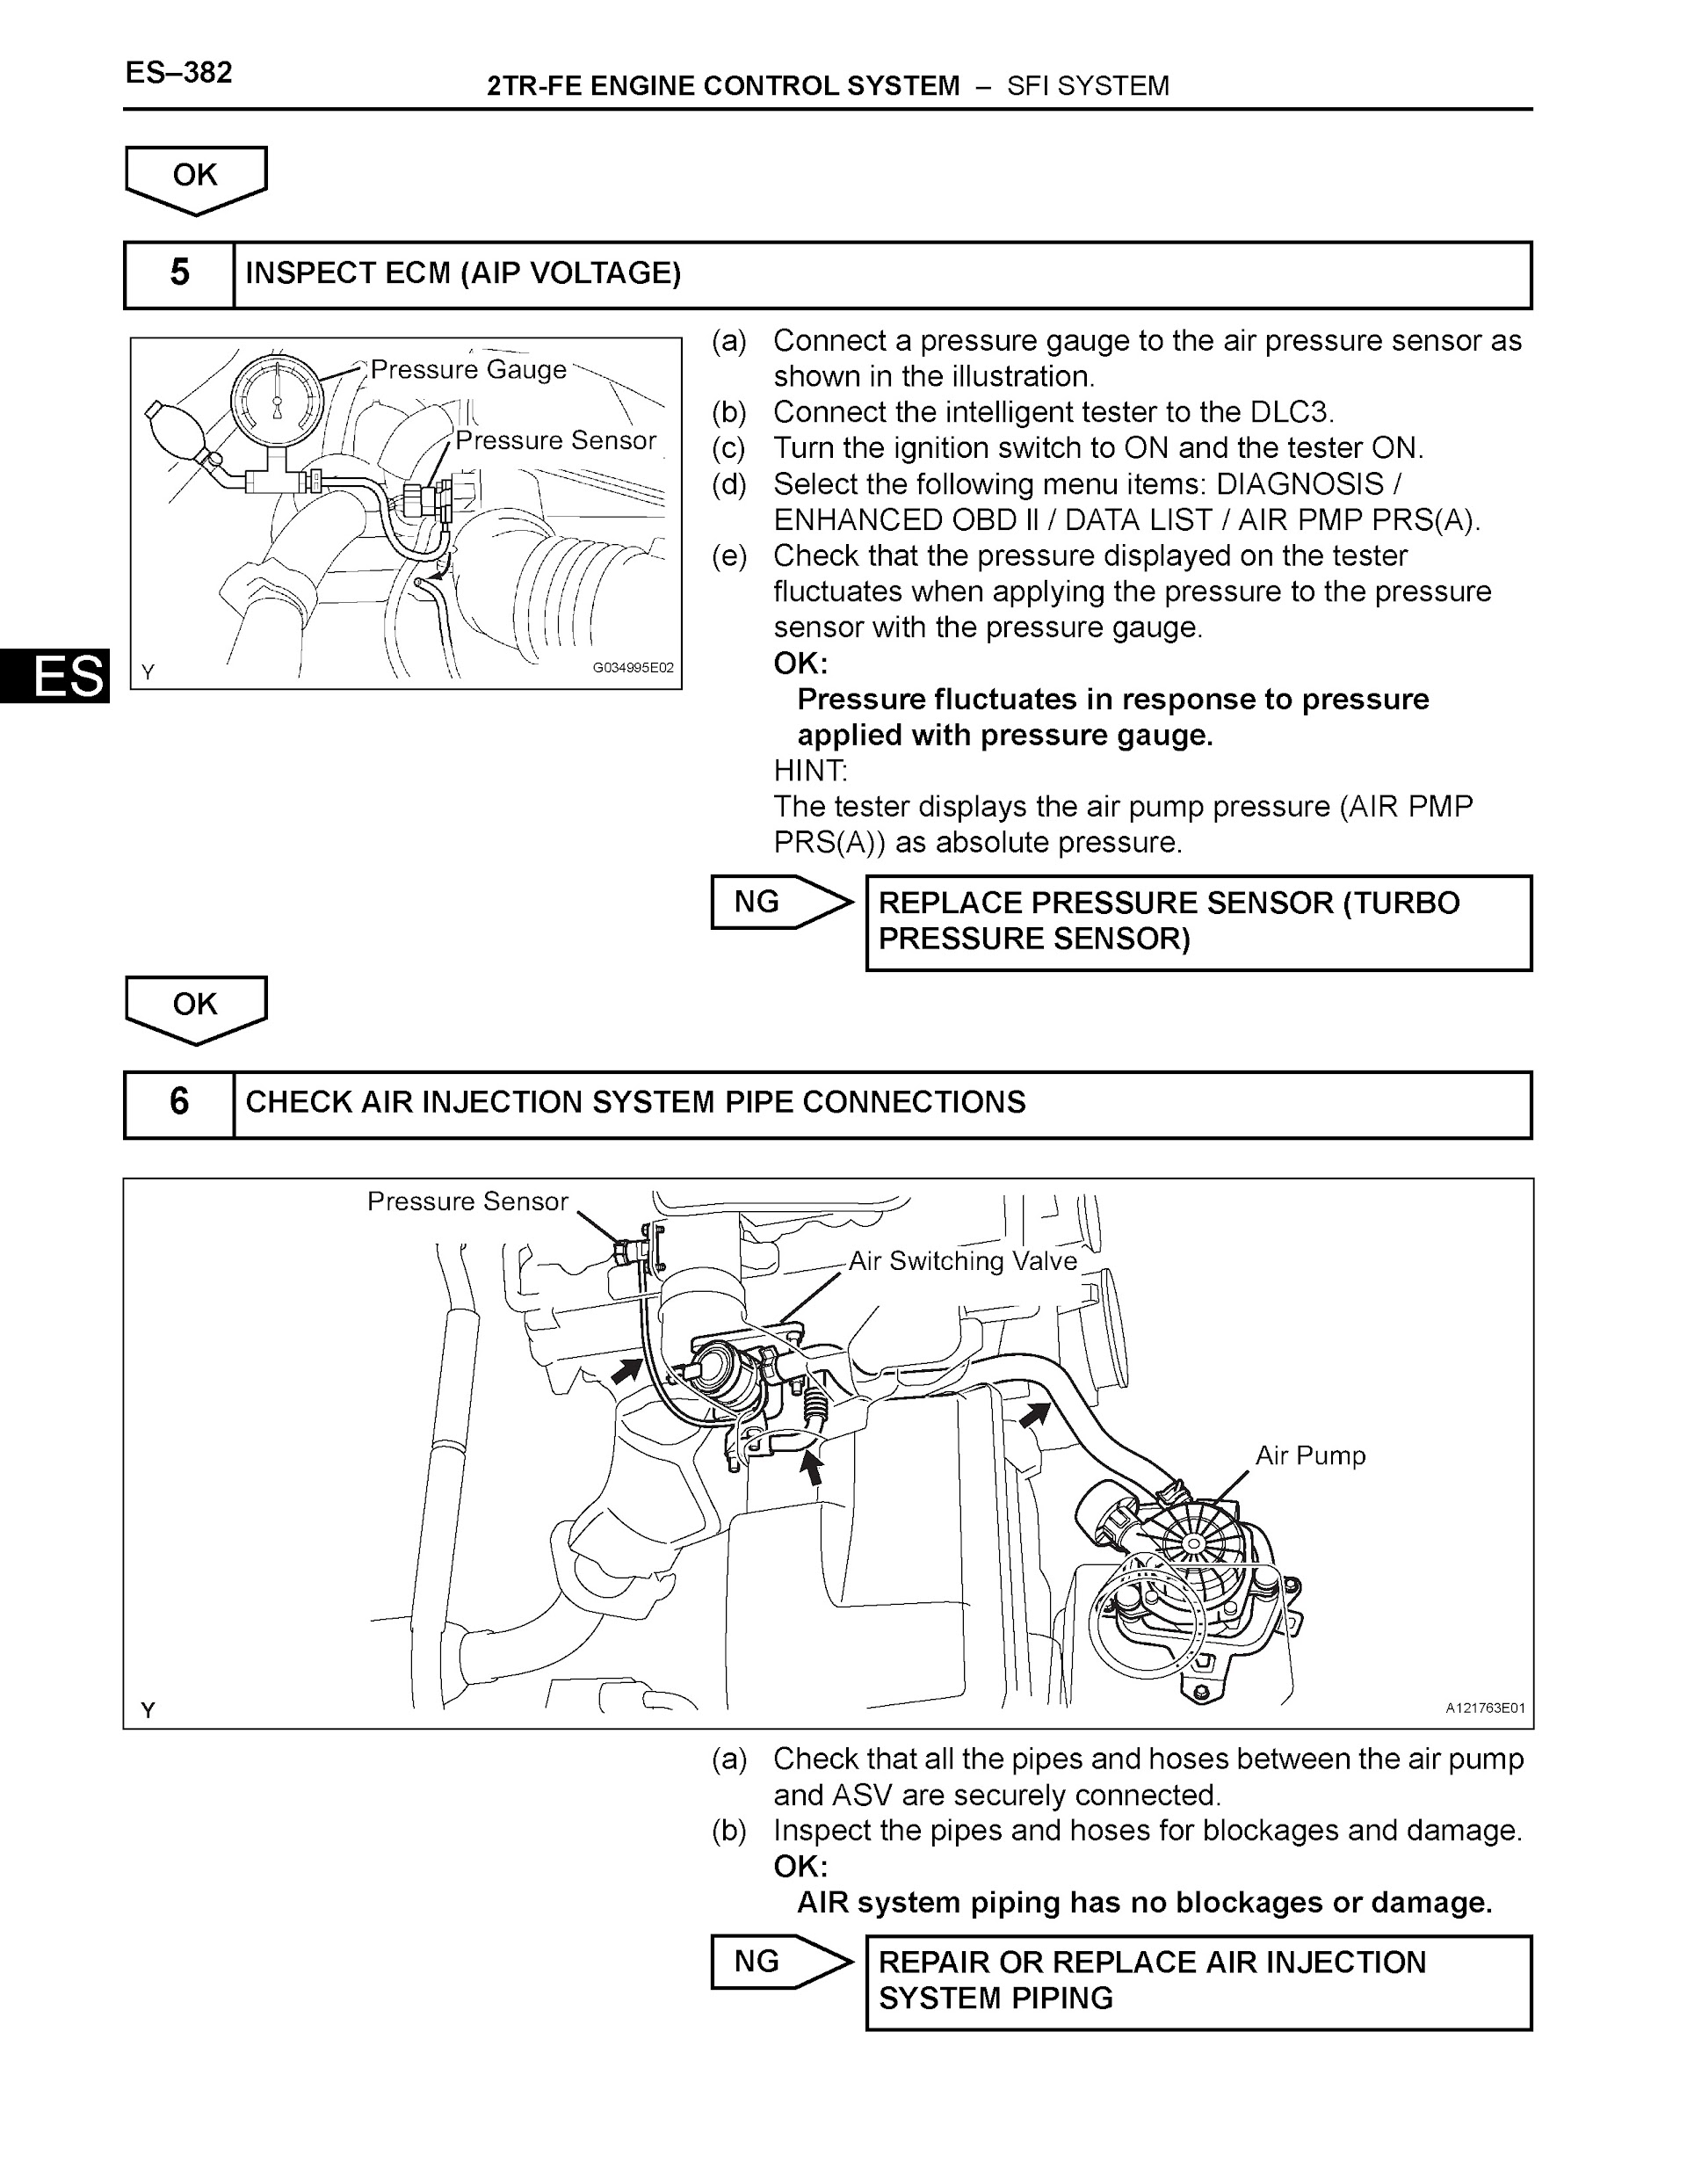 2008 Toyota Tacoma Repair Manual, 2TR-FE SFI System